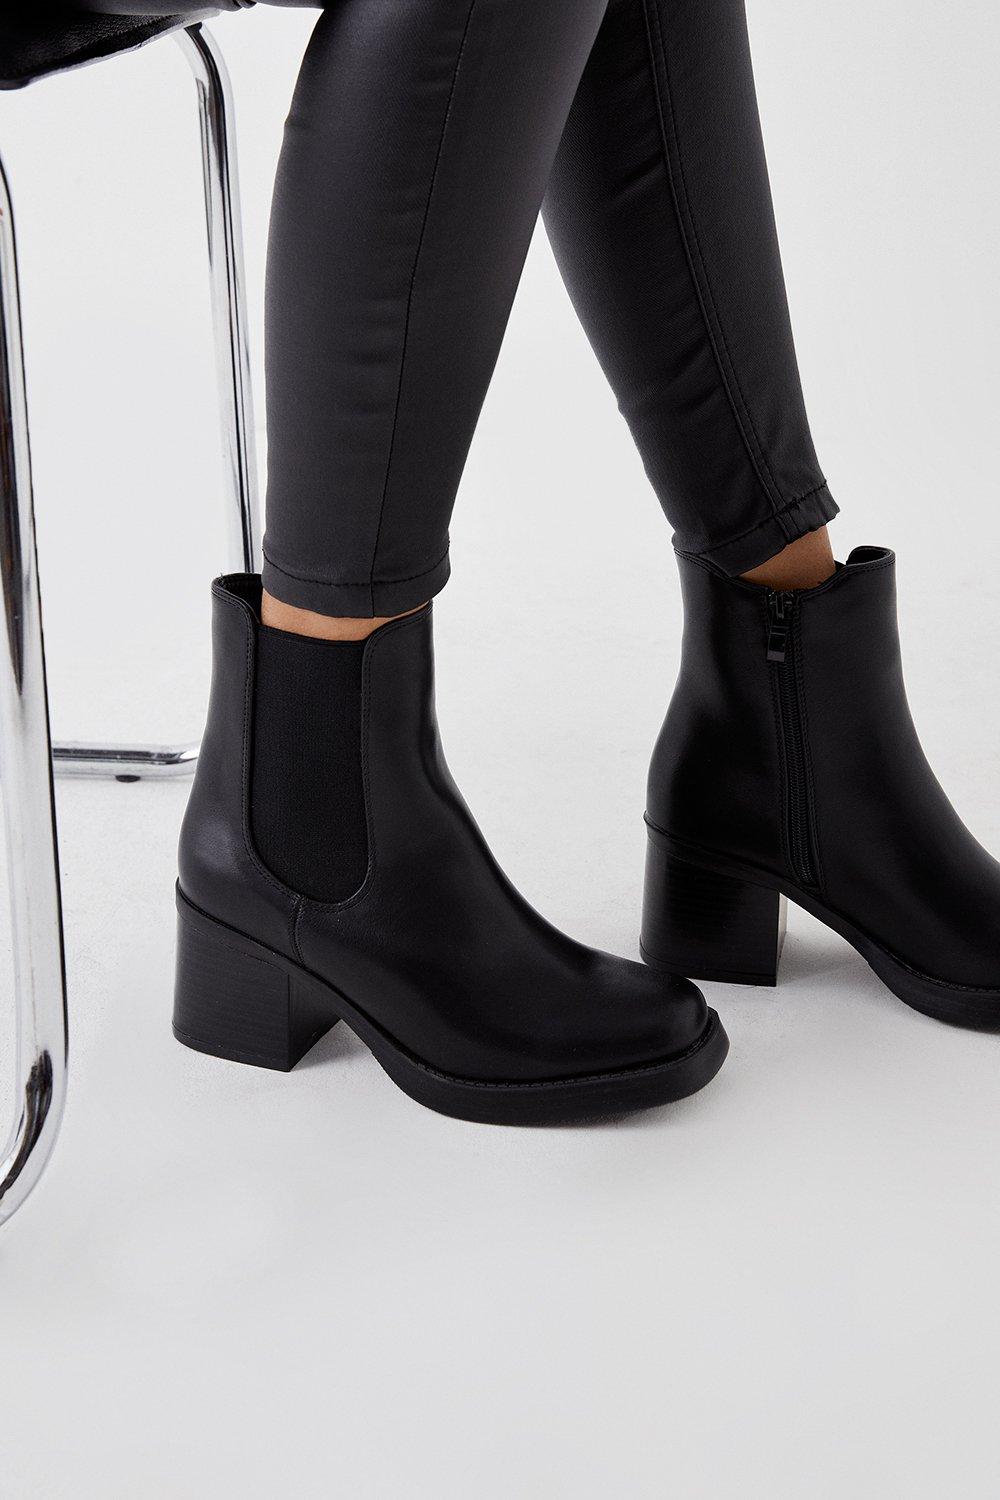 Women’s Faith: Alberta Square Toe Stack Heel Ankle Boots - black - 5